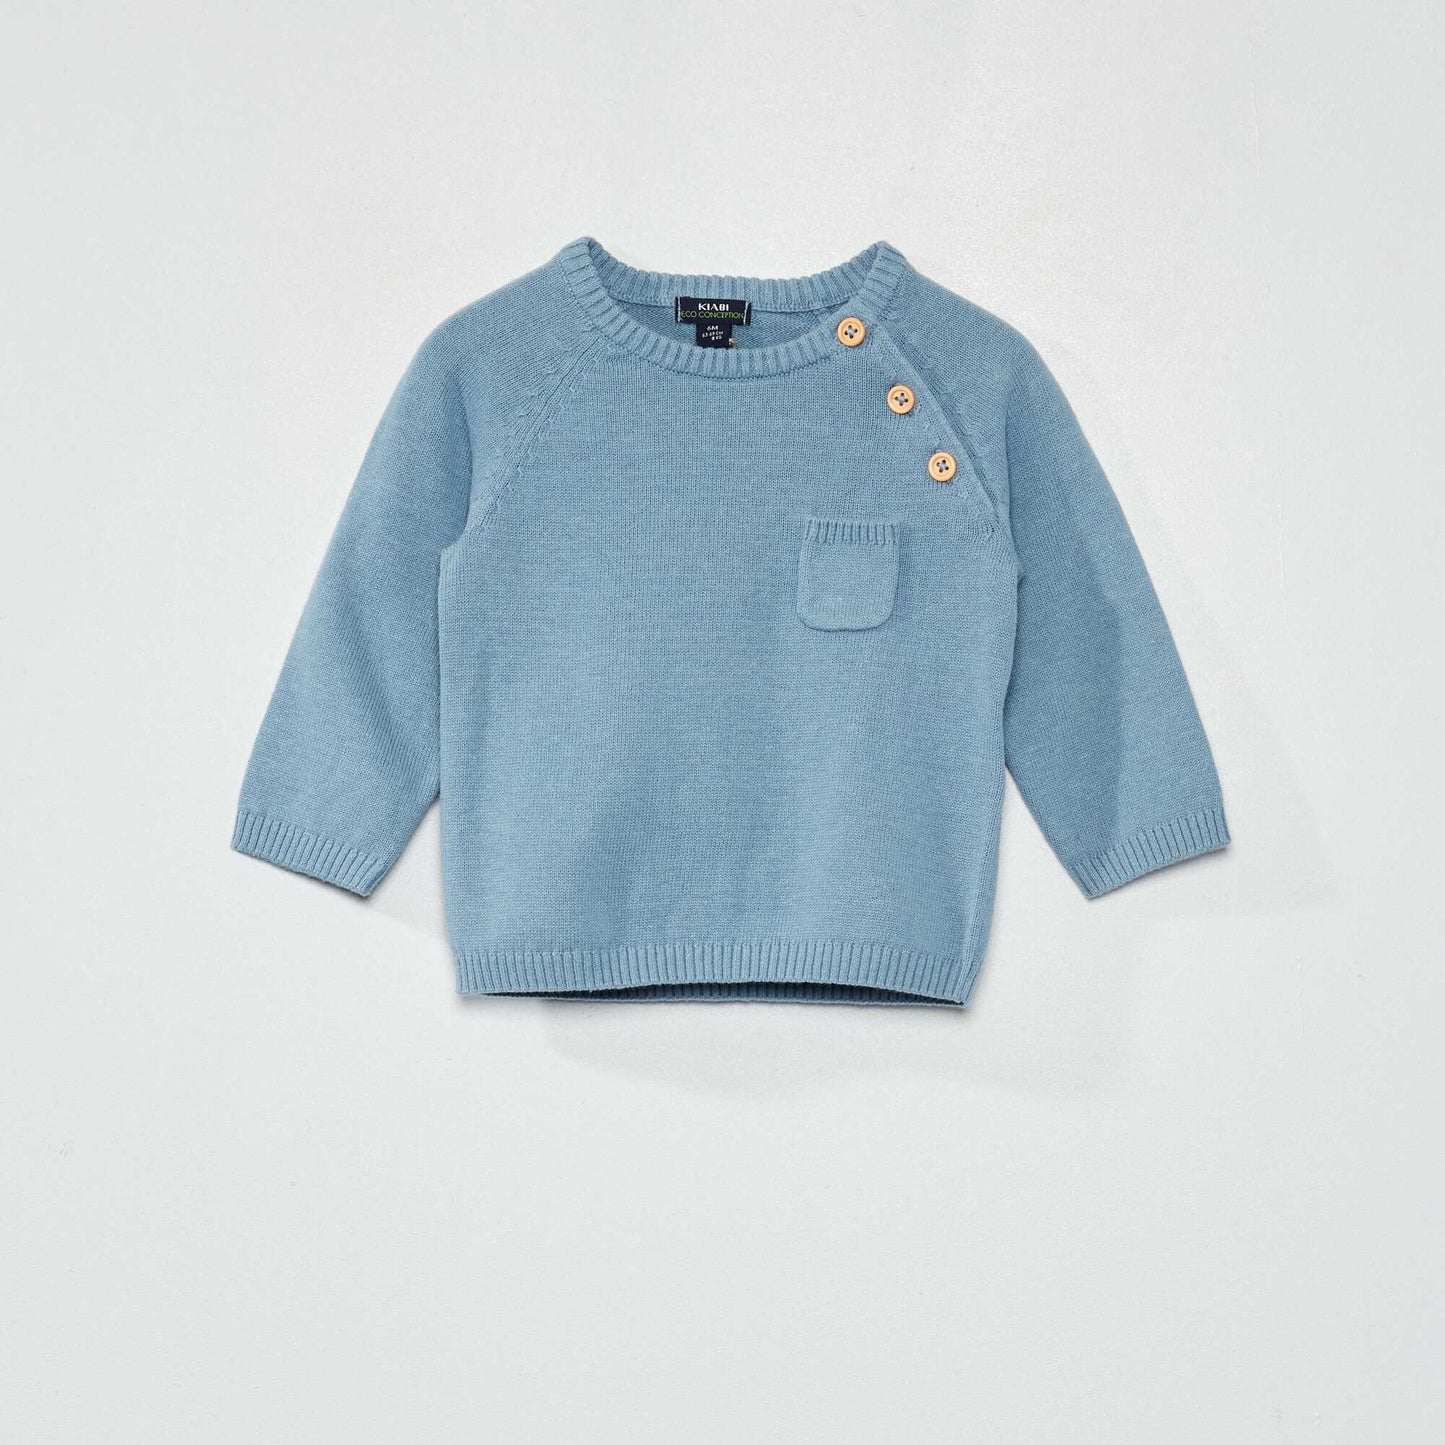 Sweater de punto azul denim